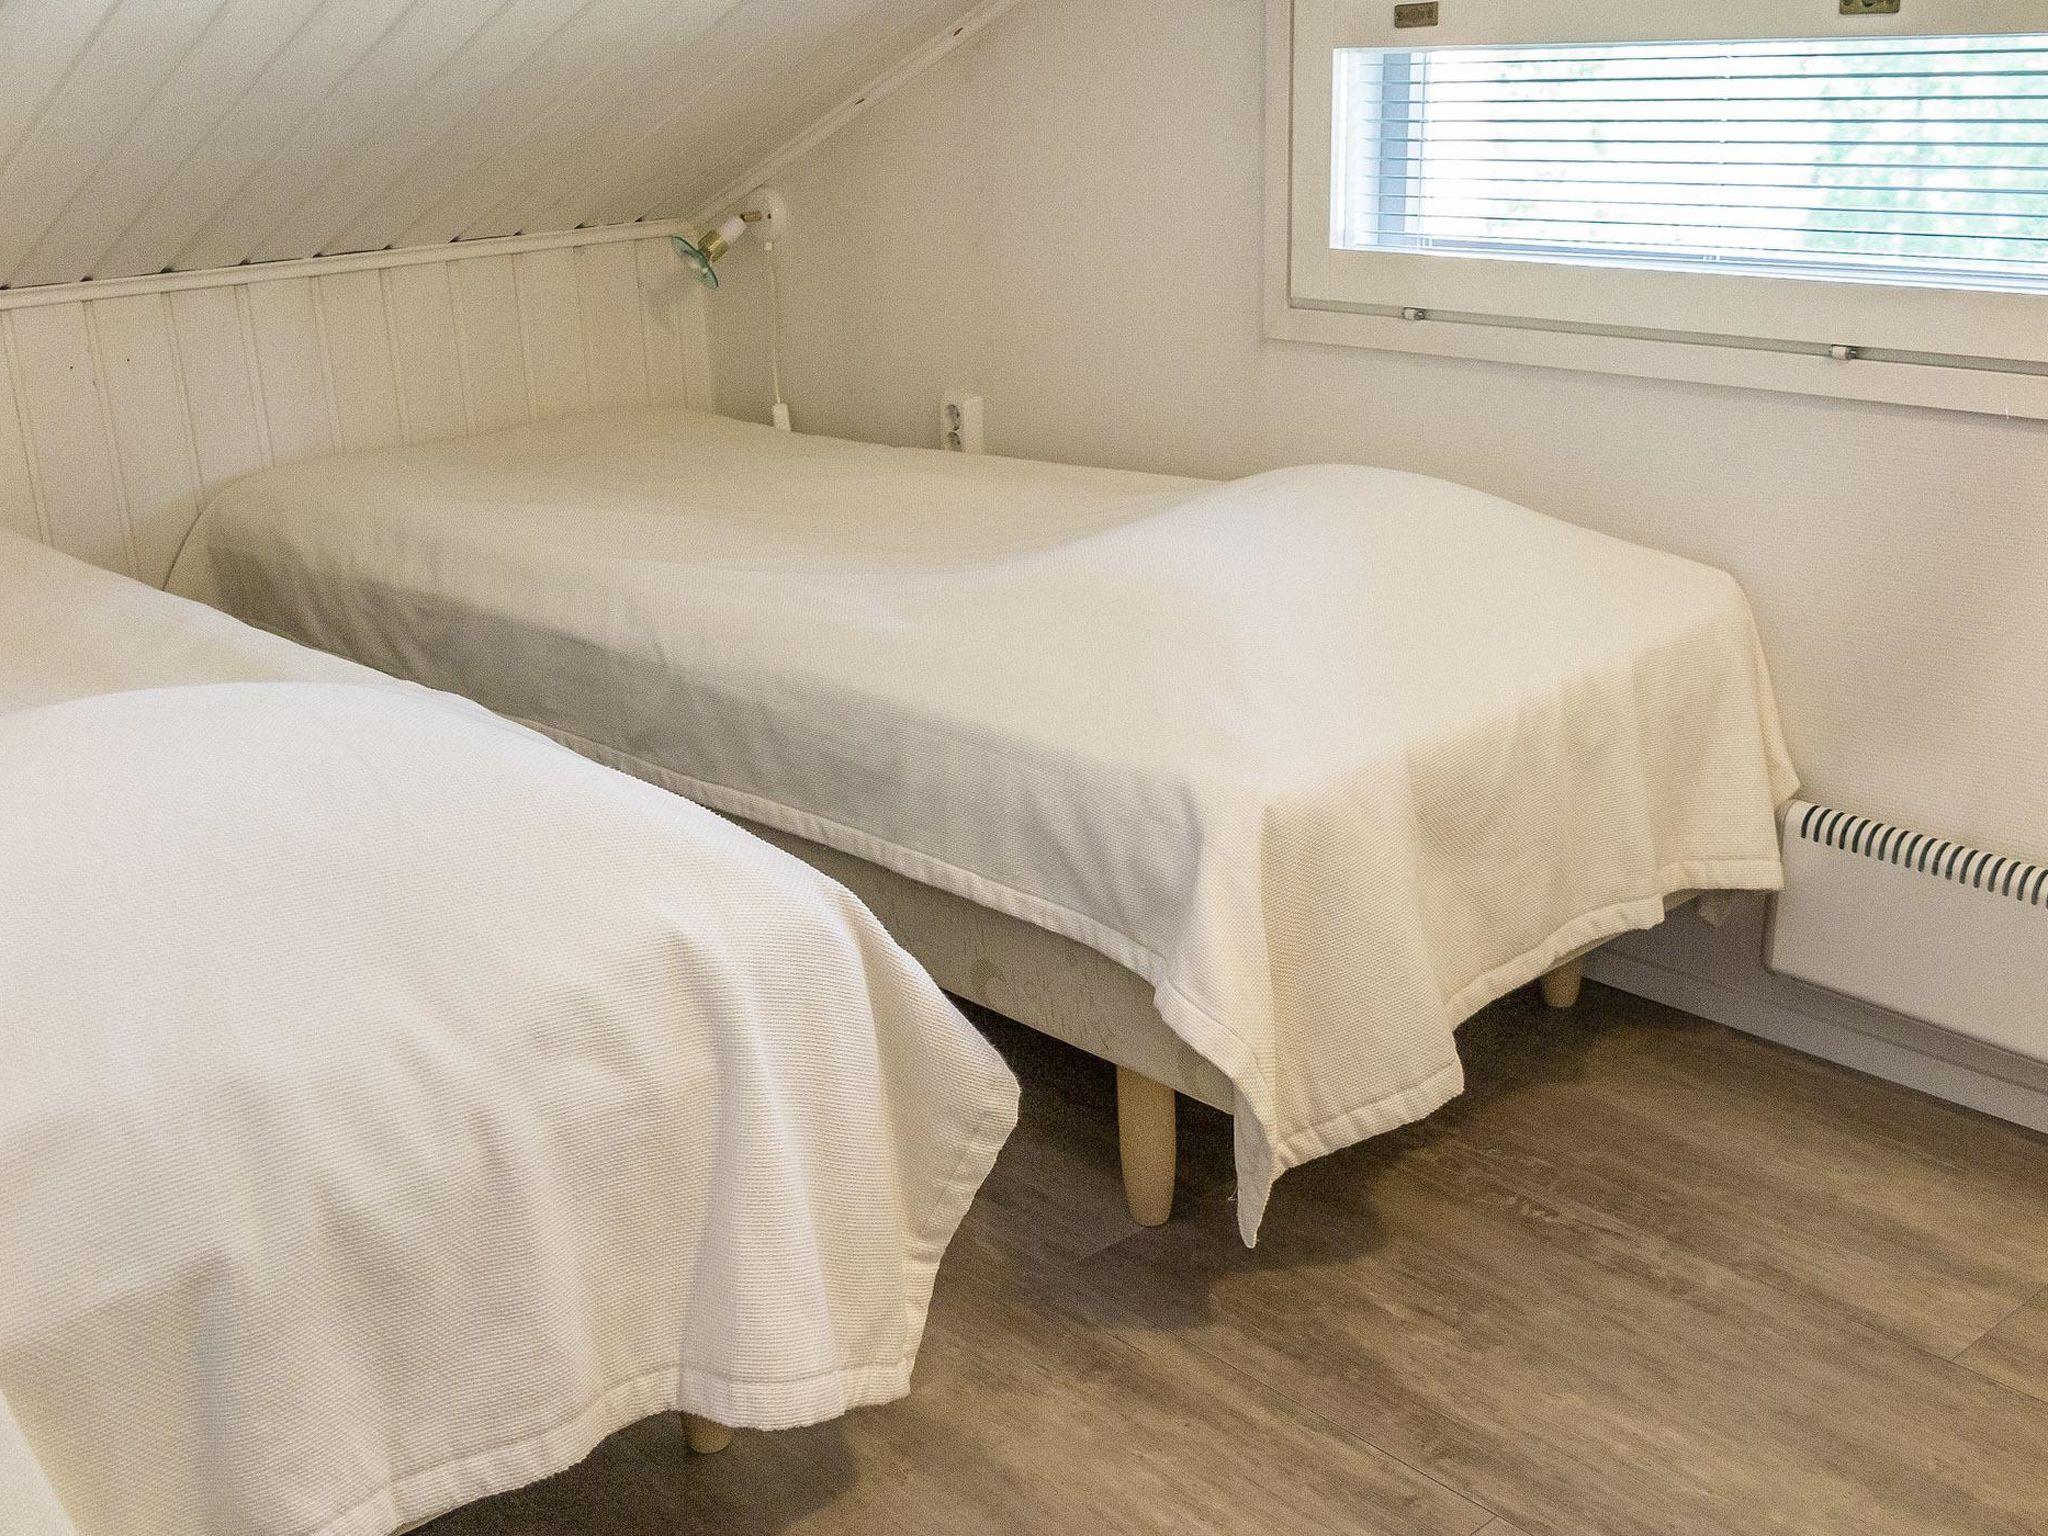 Photo 13 - 2 bedroom House in Kuopio with sauna